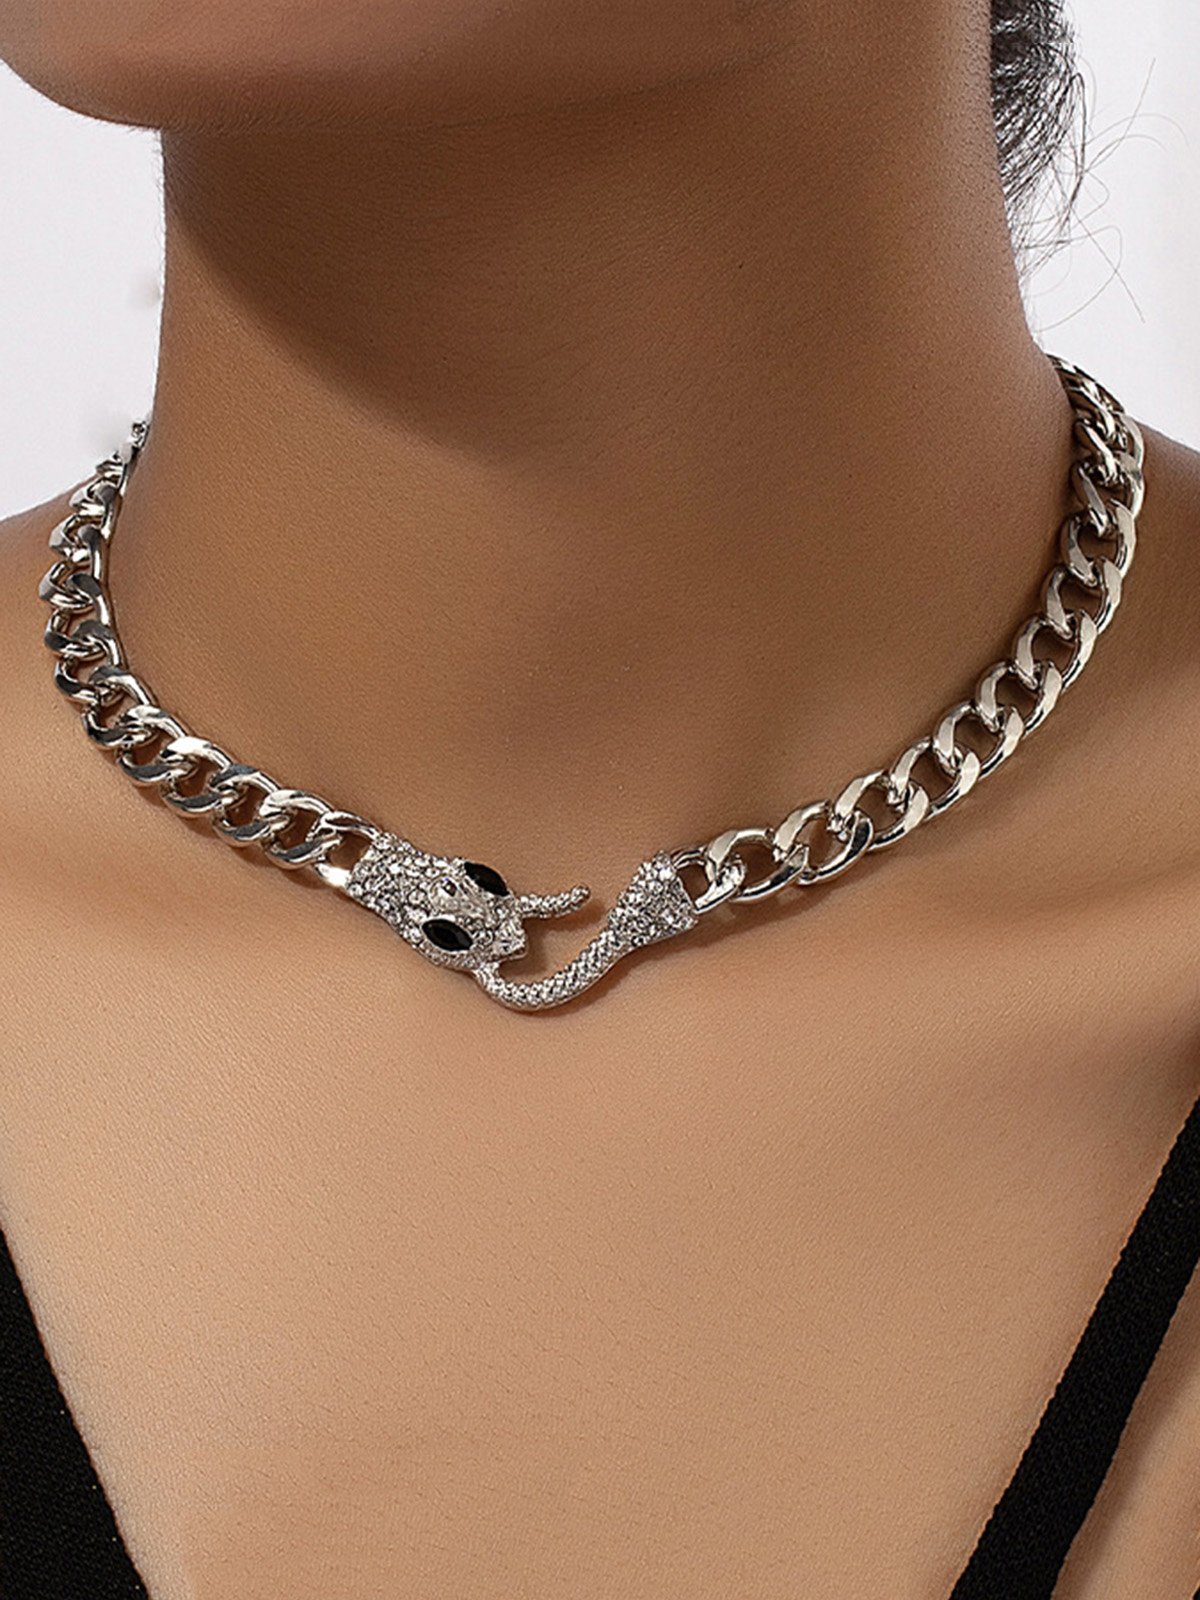 Rhinestone Snake Necklace Fashion Party Metal Chain Choker